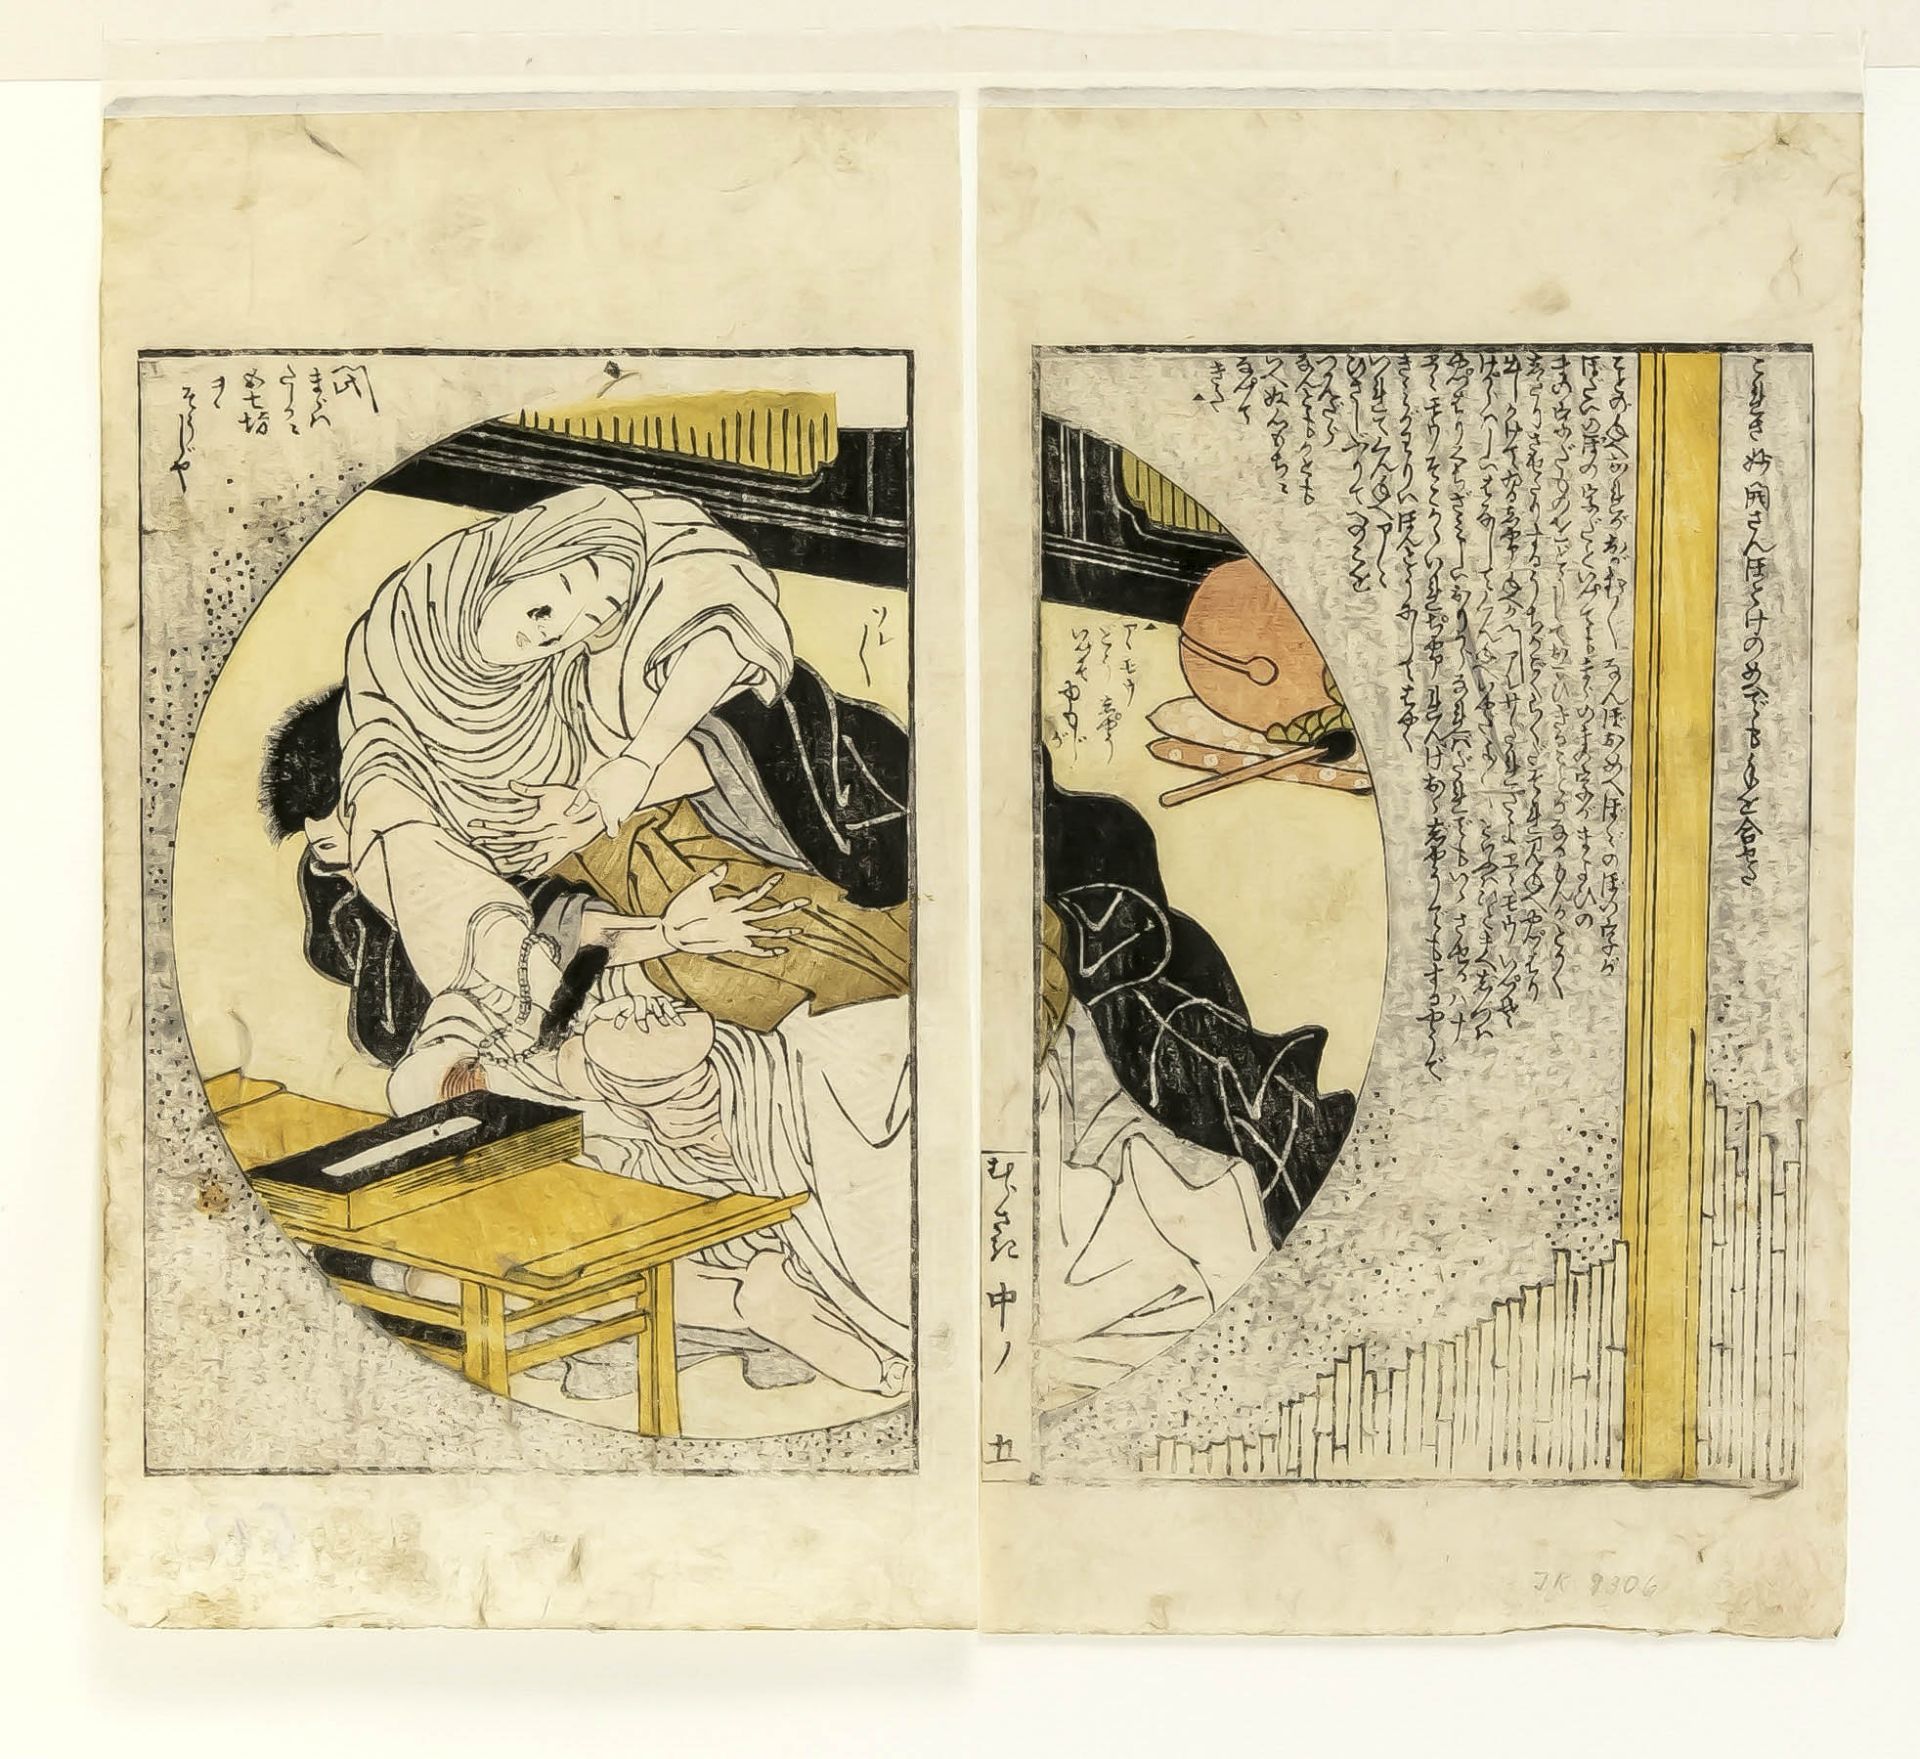 3 Shunga Doppelseiten, Japan, 19. Jh. (late Edo). F